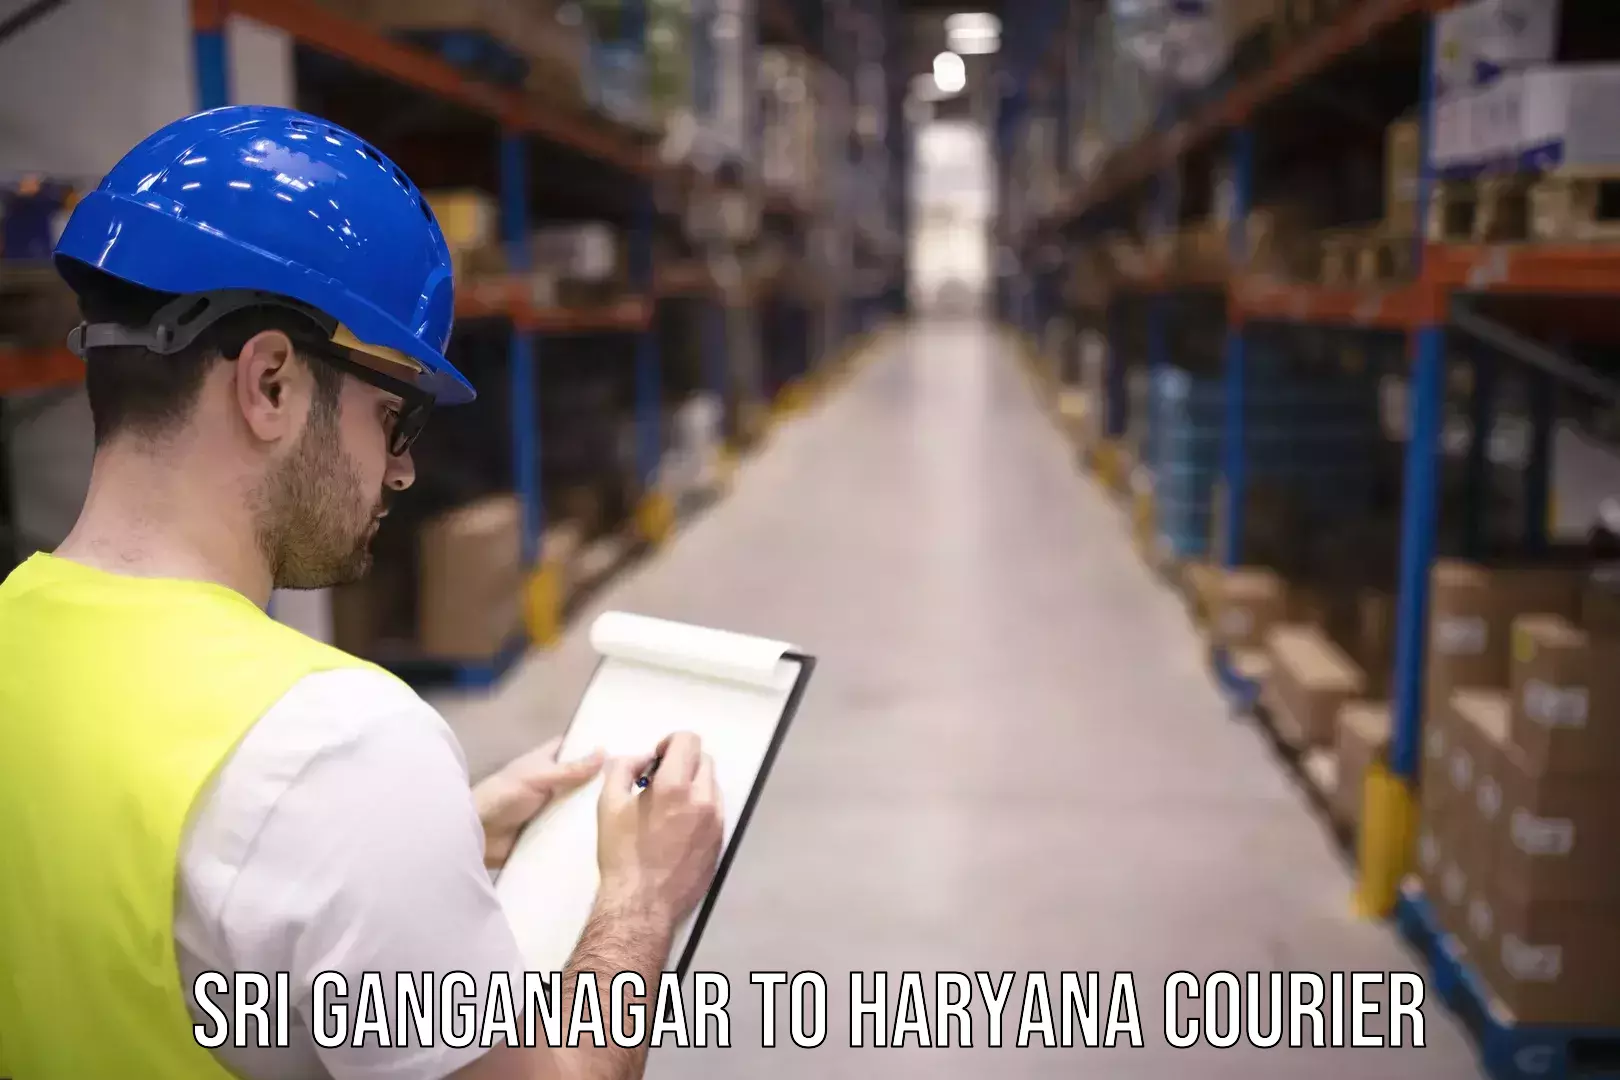 Speedy delivery service Sri Ganganagar to Haryana